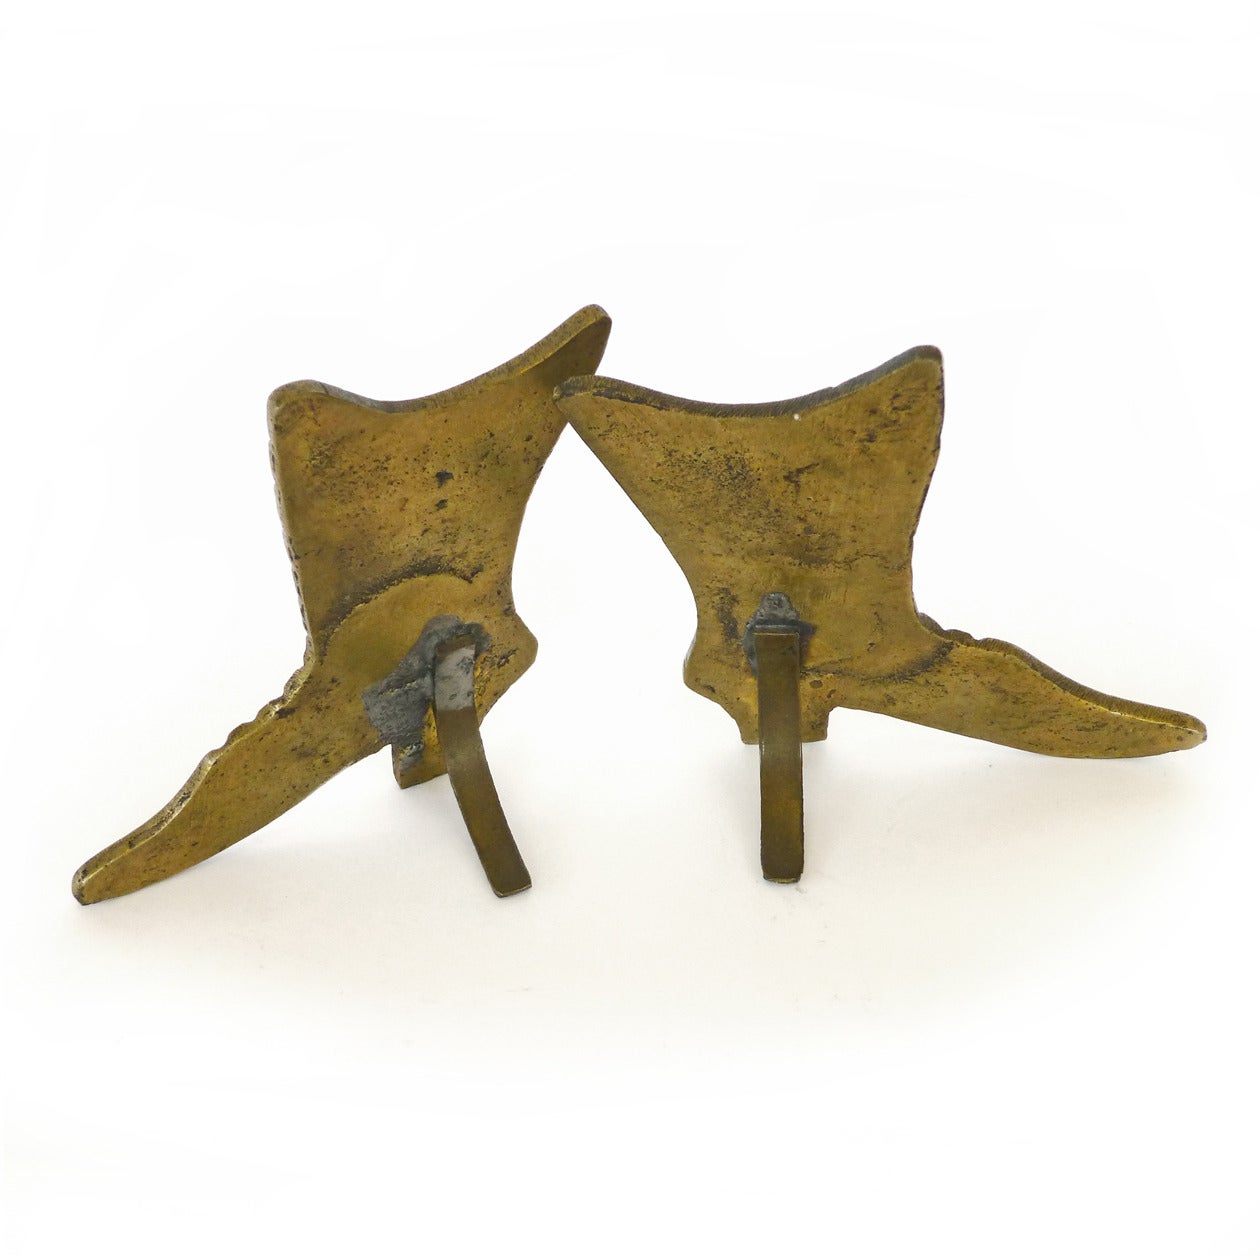 Pair of “Ladies Boots” English brass chimney ornaments, circa 1890.